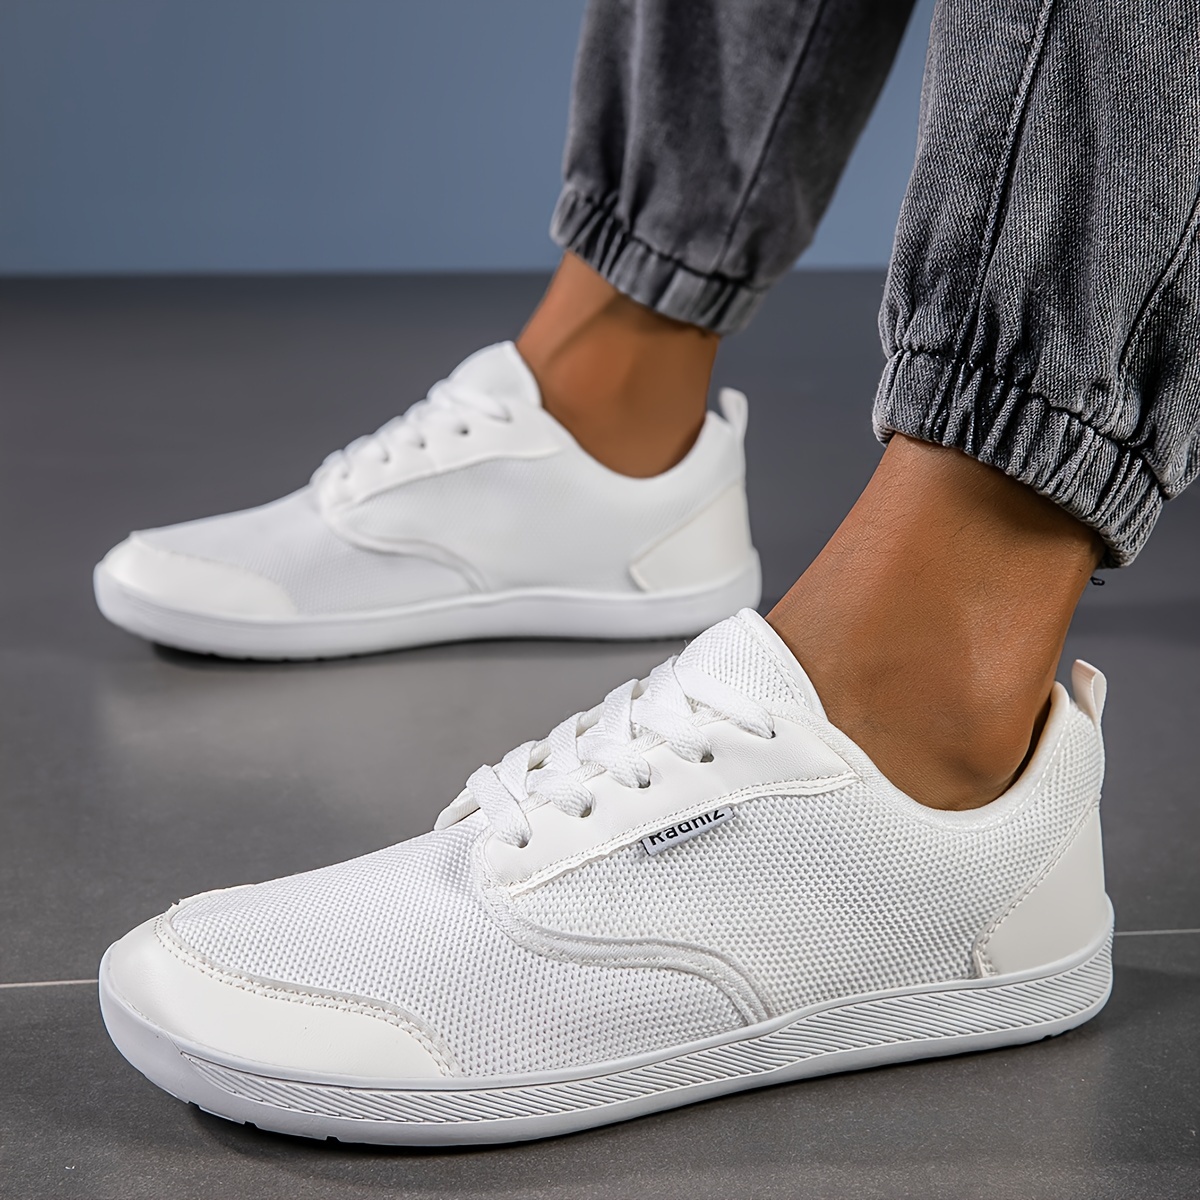 solid versatile sneakers men s minimalist style round toe details 8